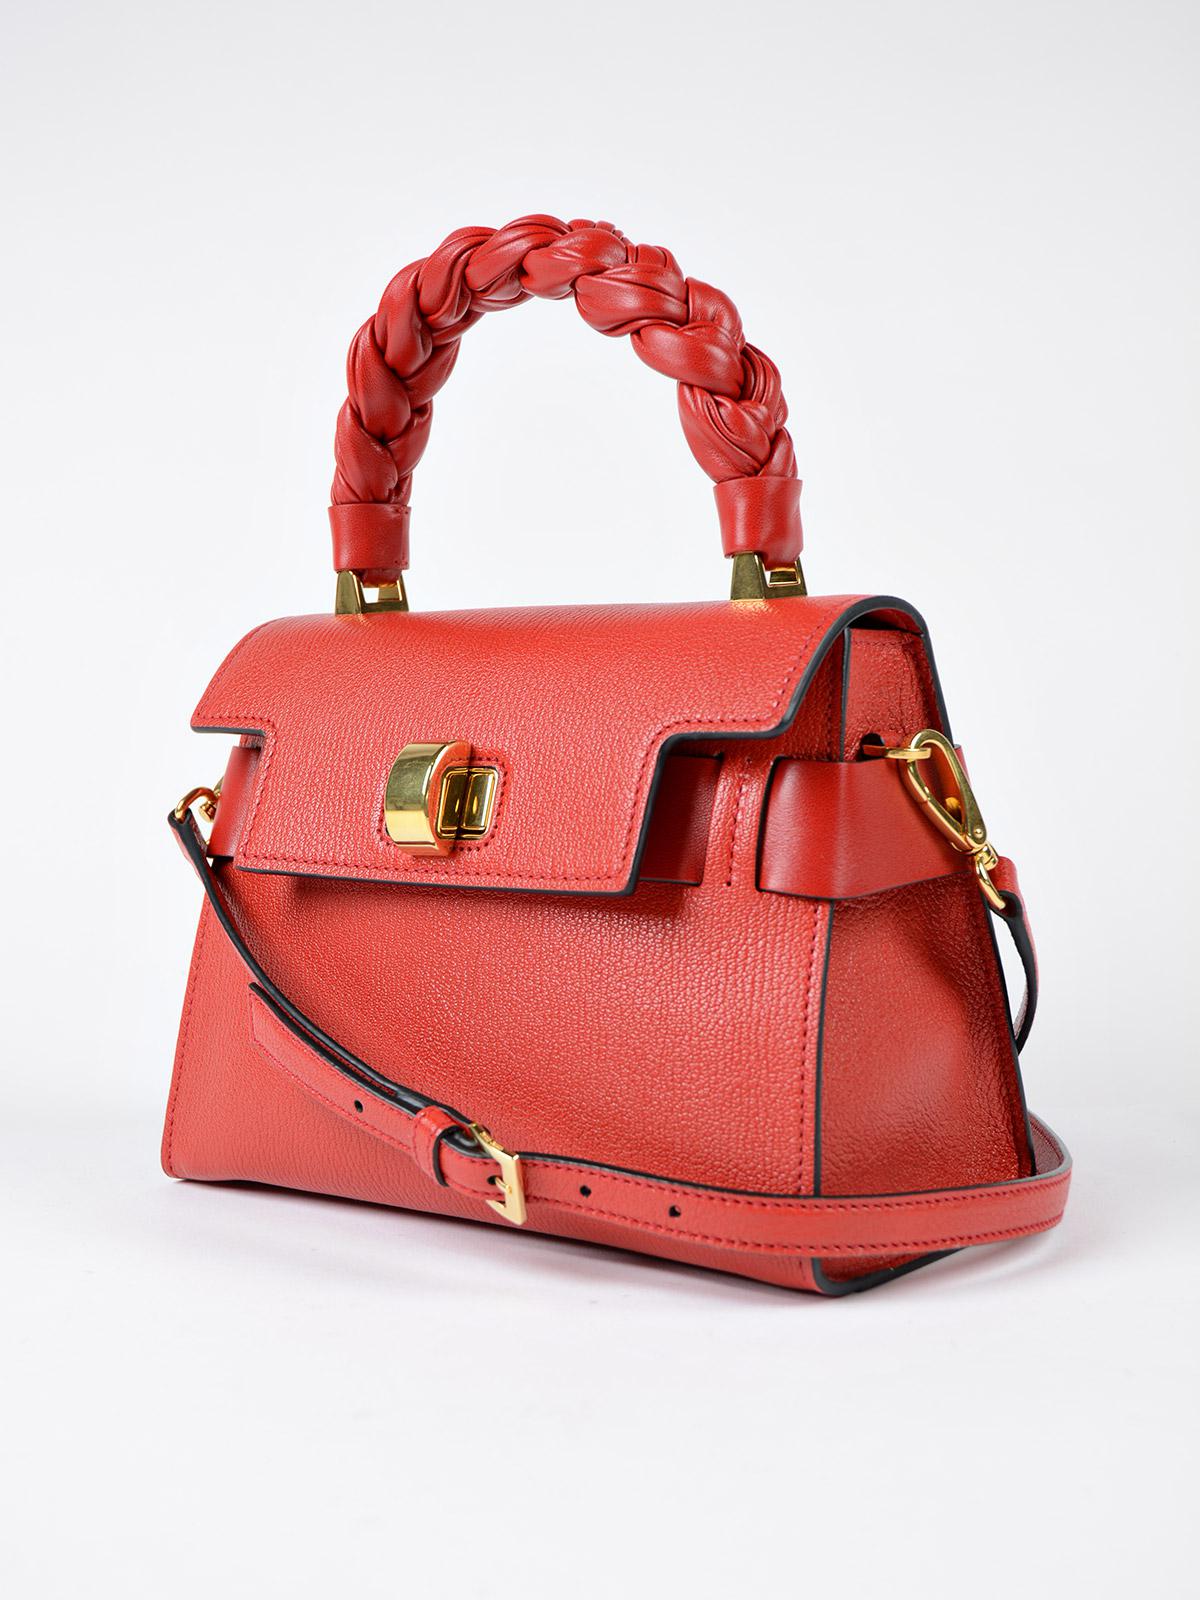 Lyst - Miu miu Madras Handbag in Red